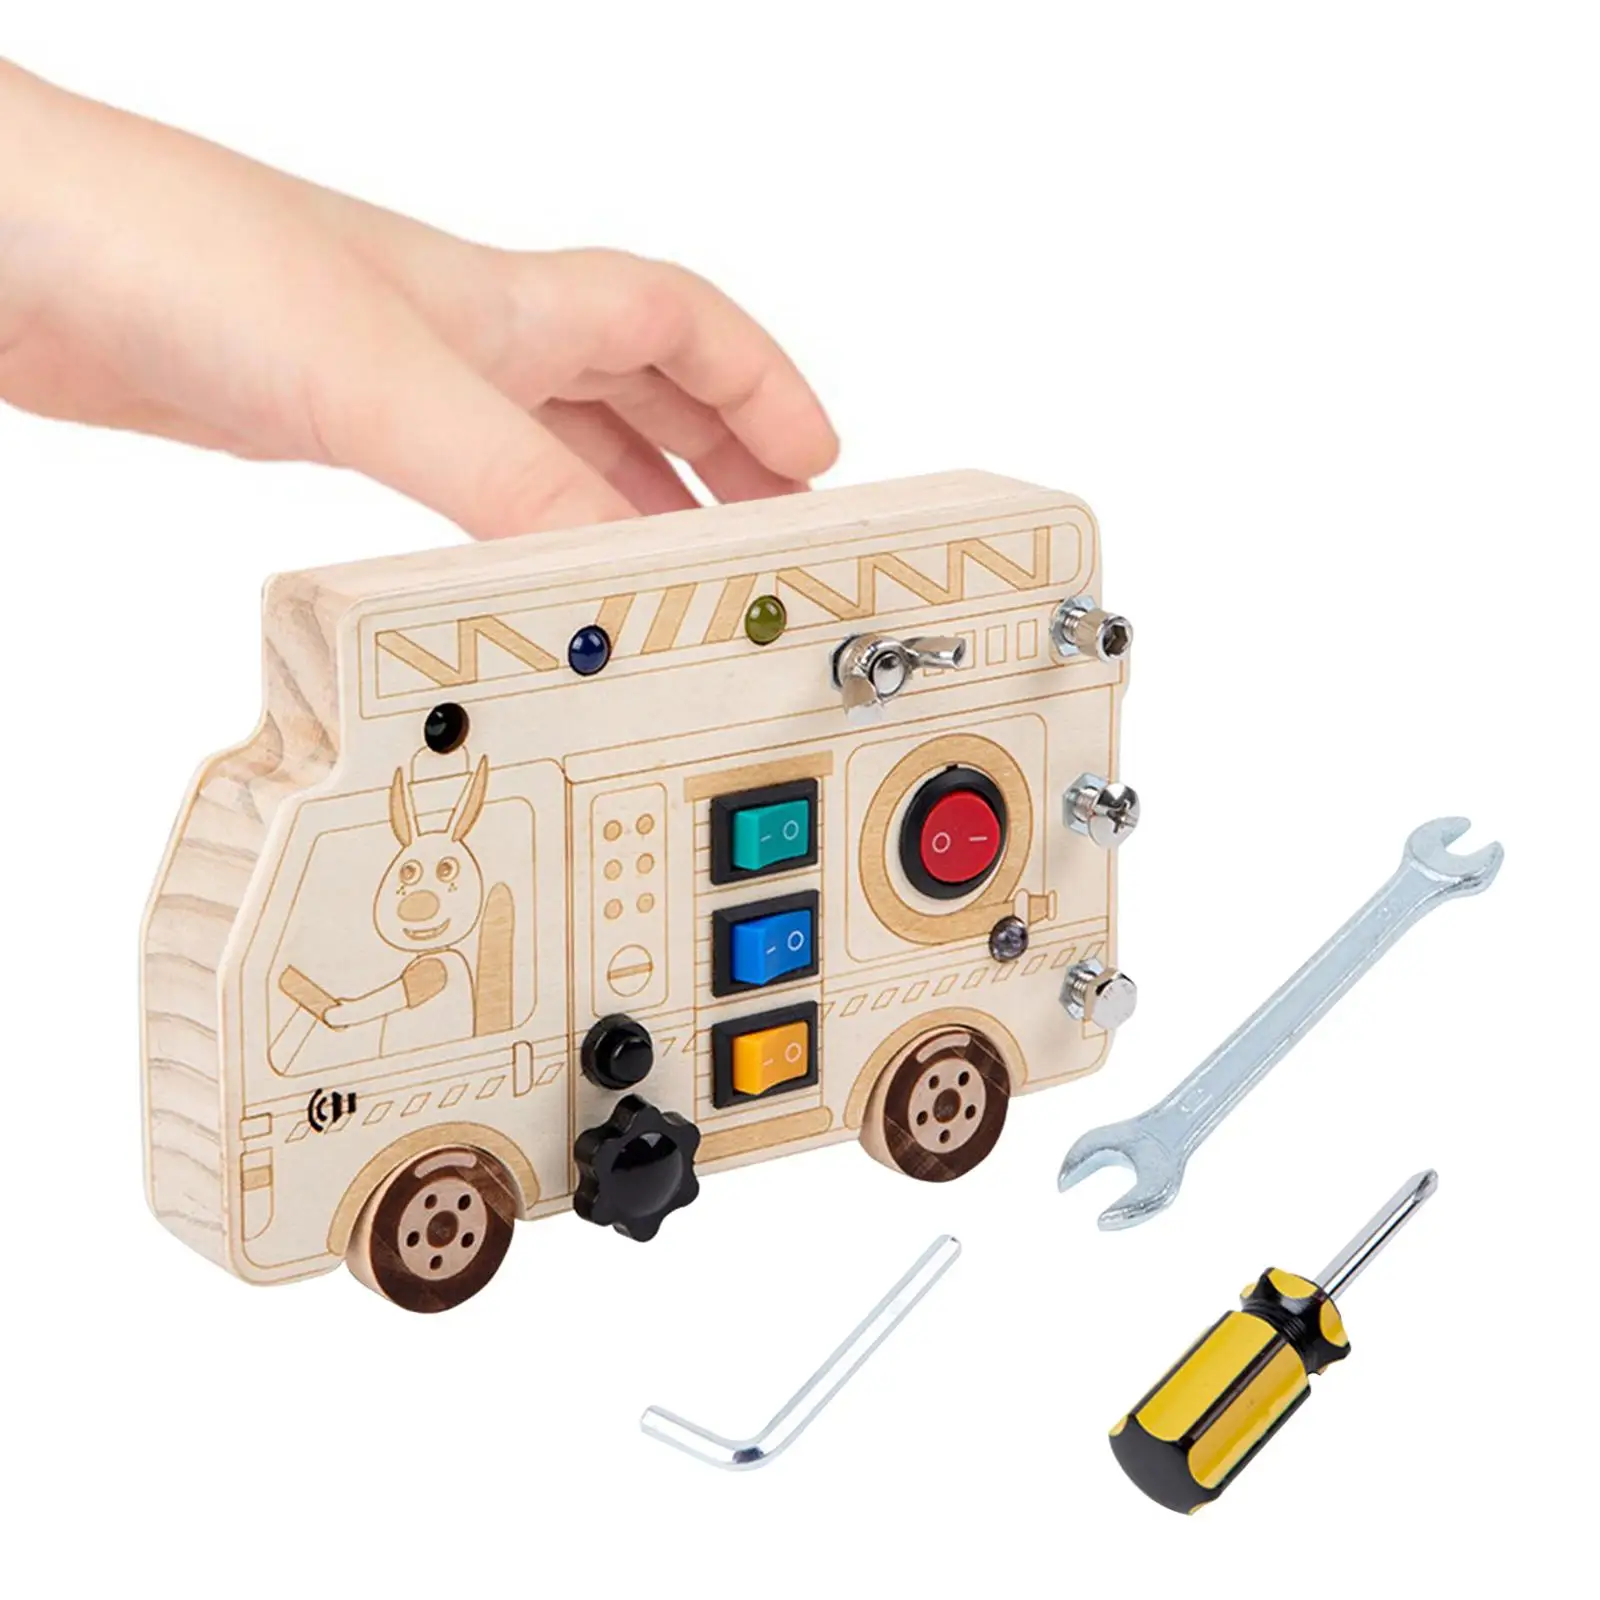 Wooden Sensory Board Toy Learning Activities Development Toys with Tools Gifts for Kindergarten Preschool Nursery Girls Boys